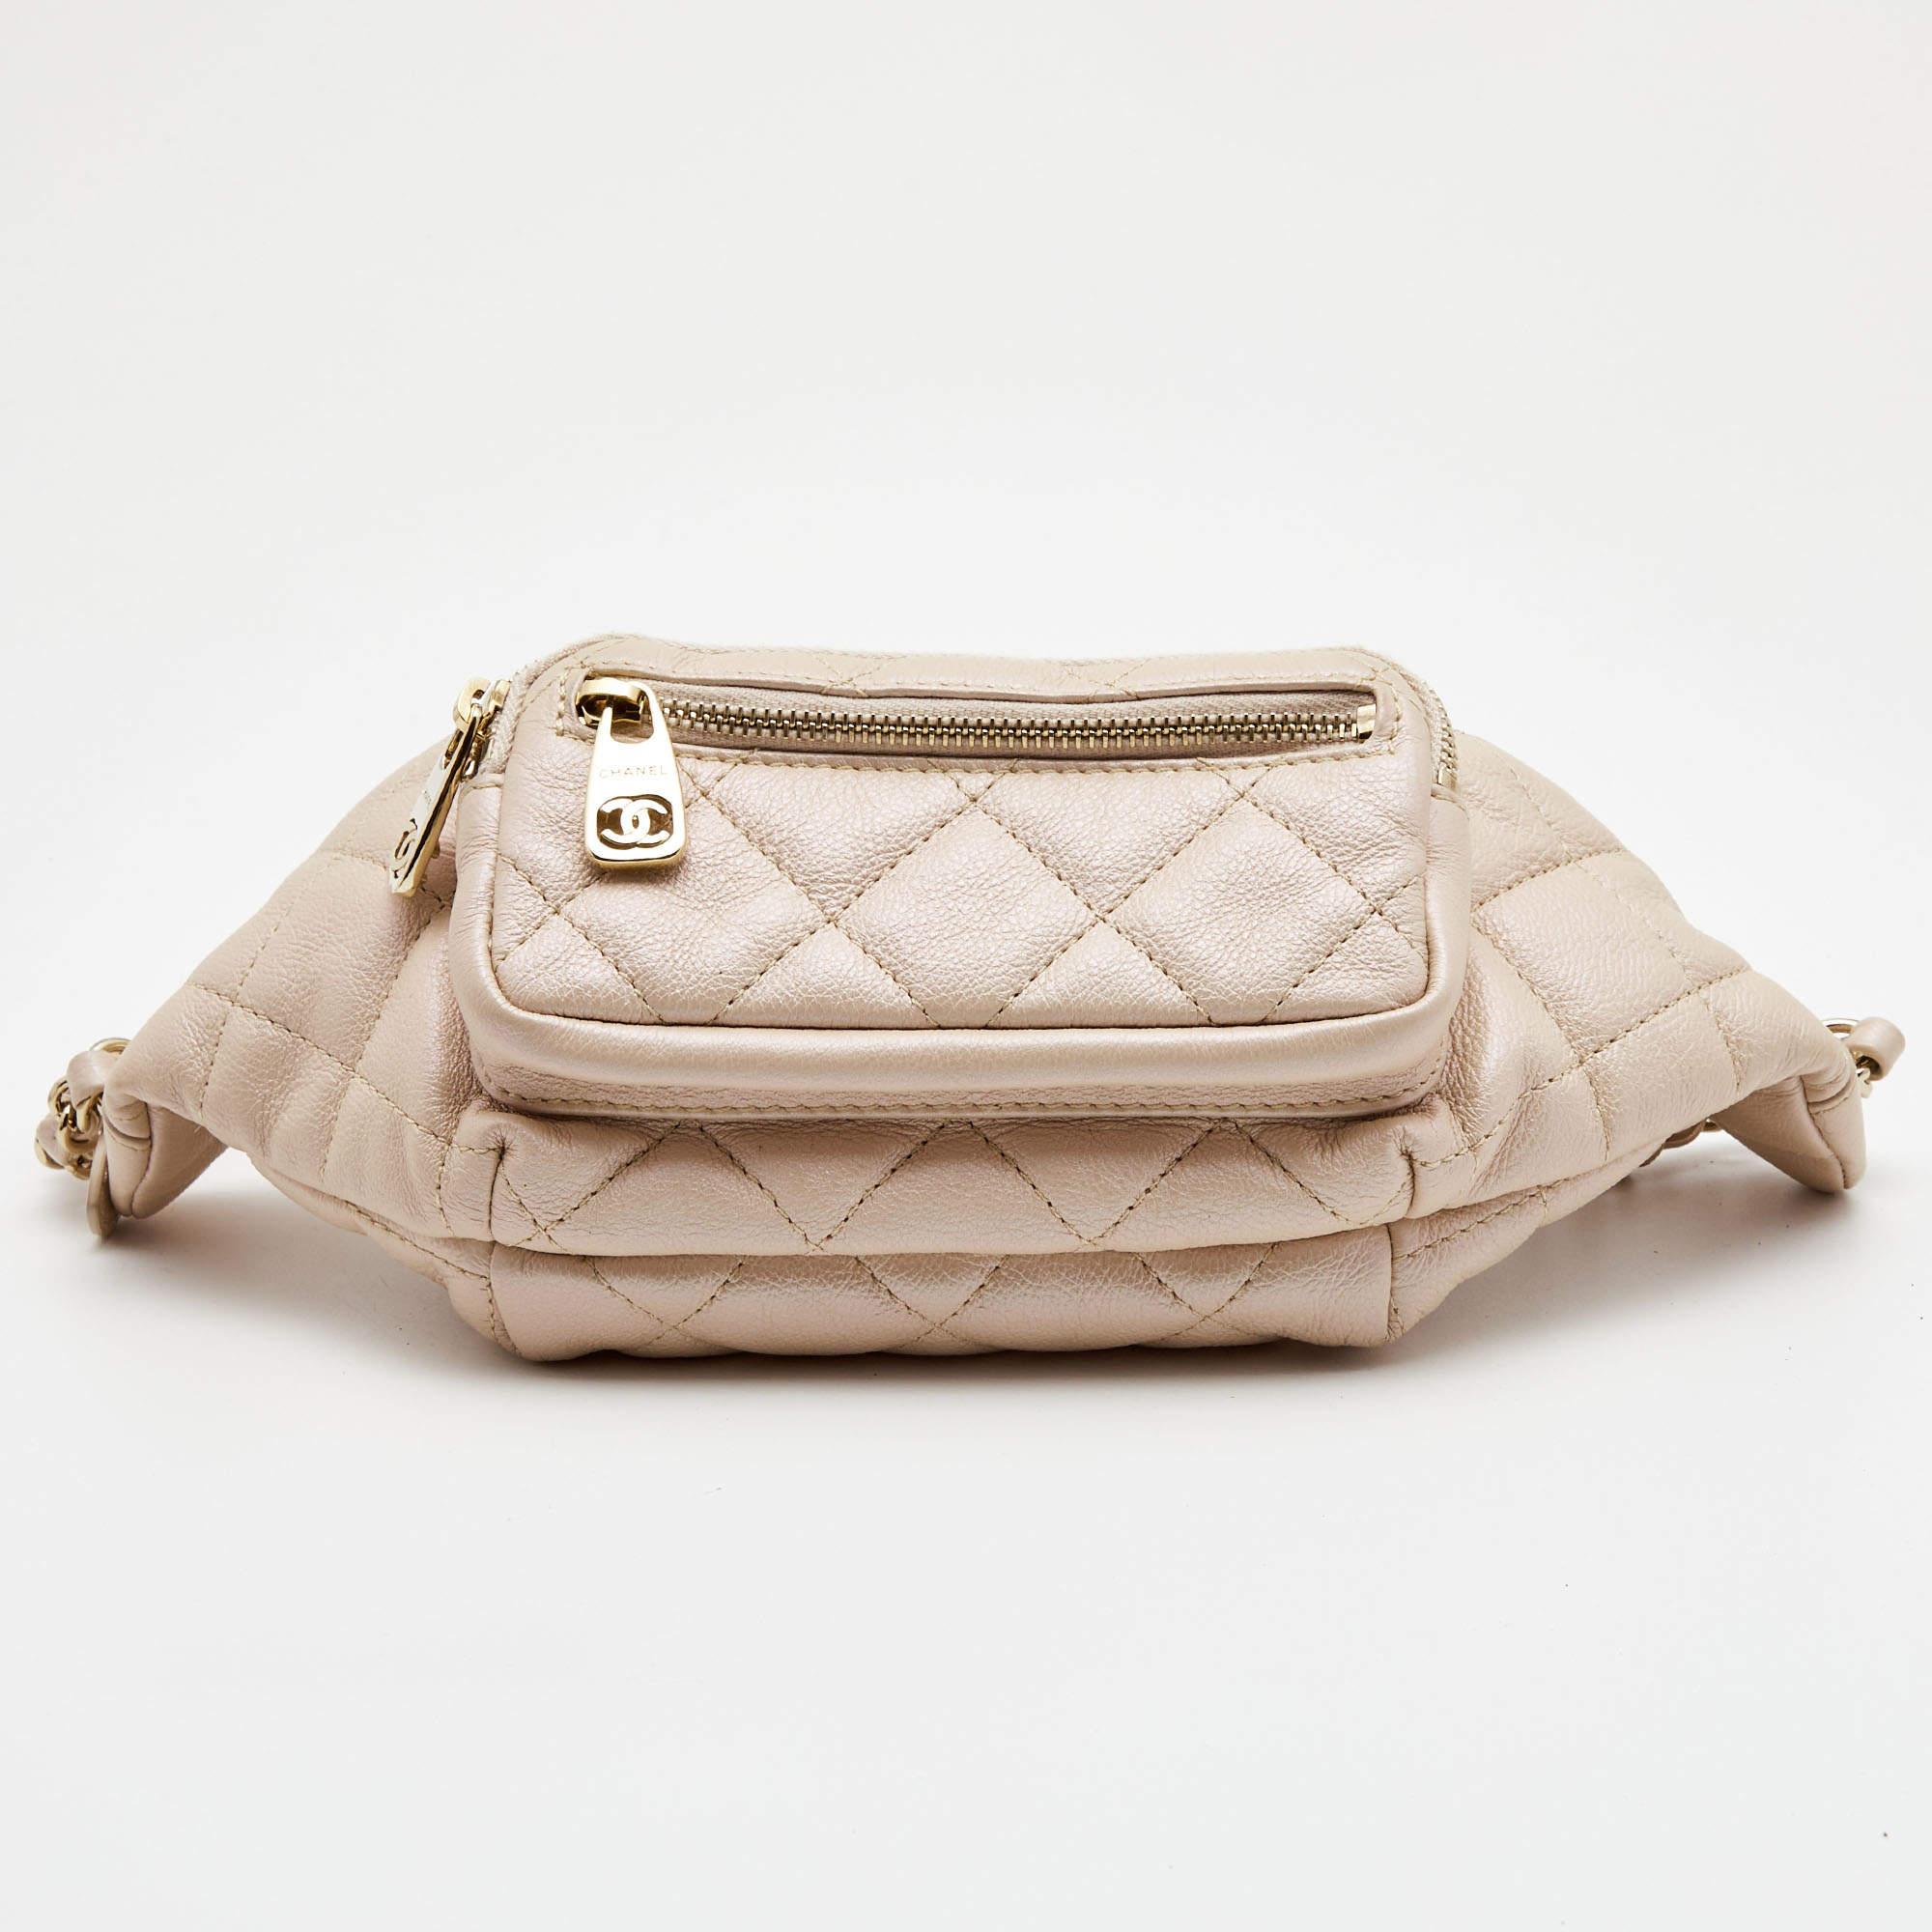 Chanel Beige Quilted Shimmer Leather Fanny Pack Waistbelt Bag 1